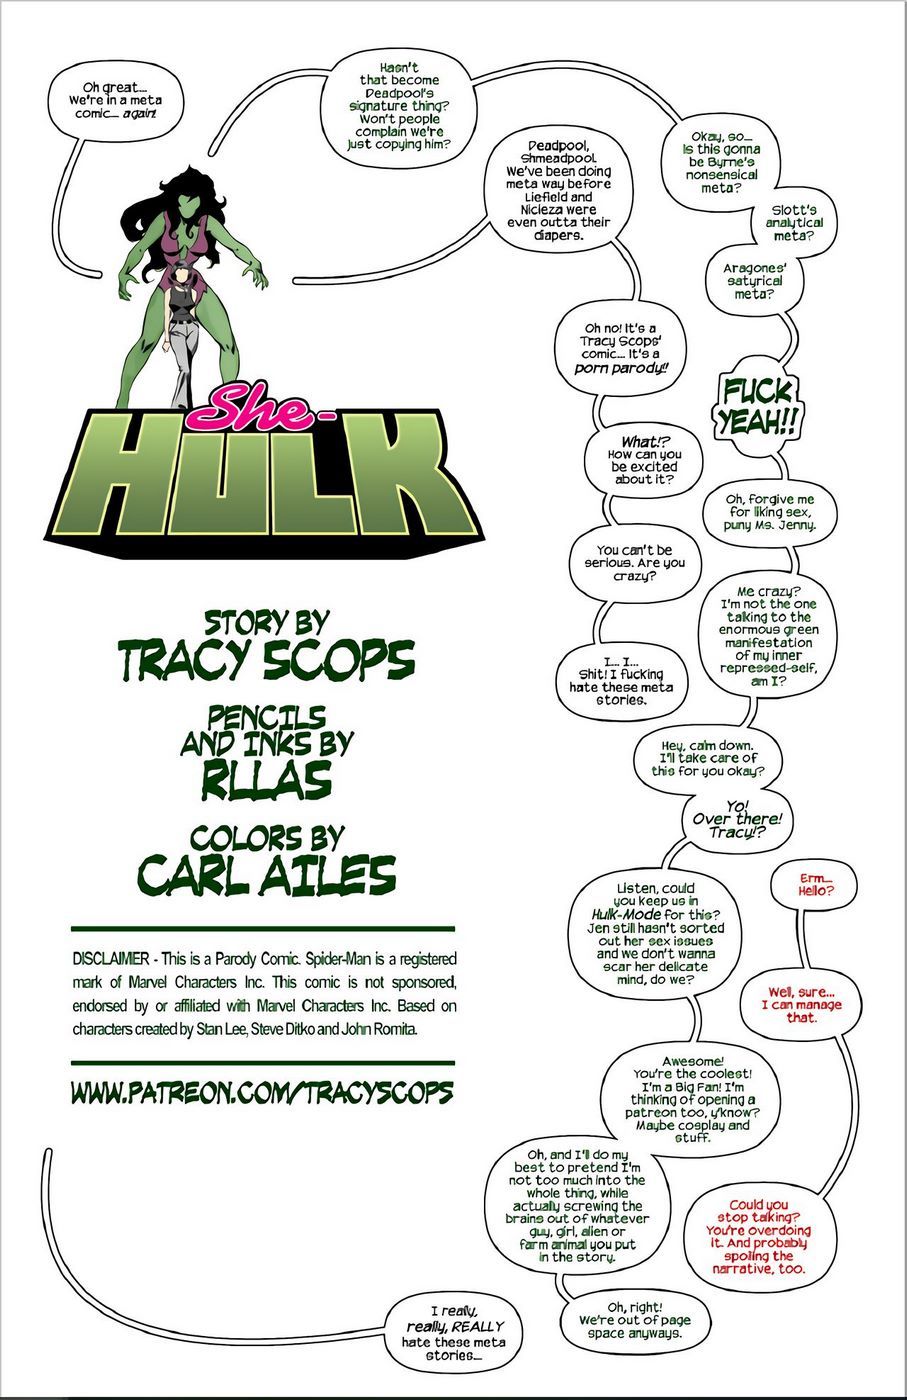 She-Hulk Rllas [Tracy scops] page 2